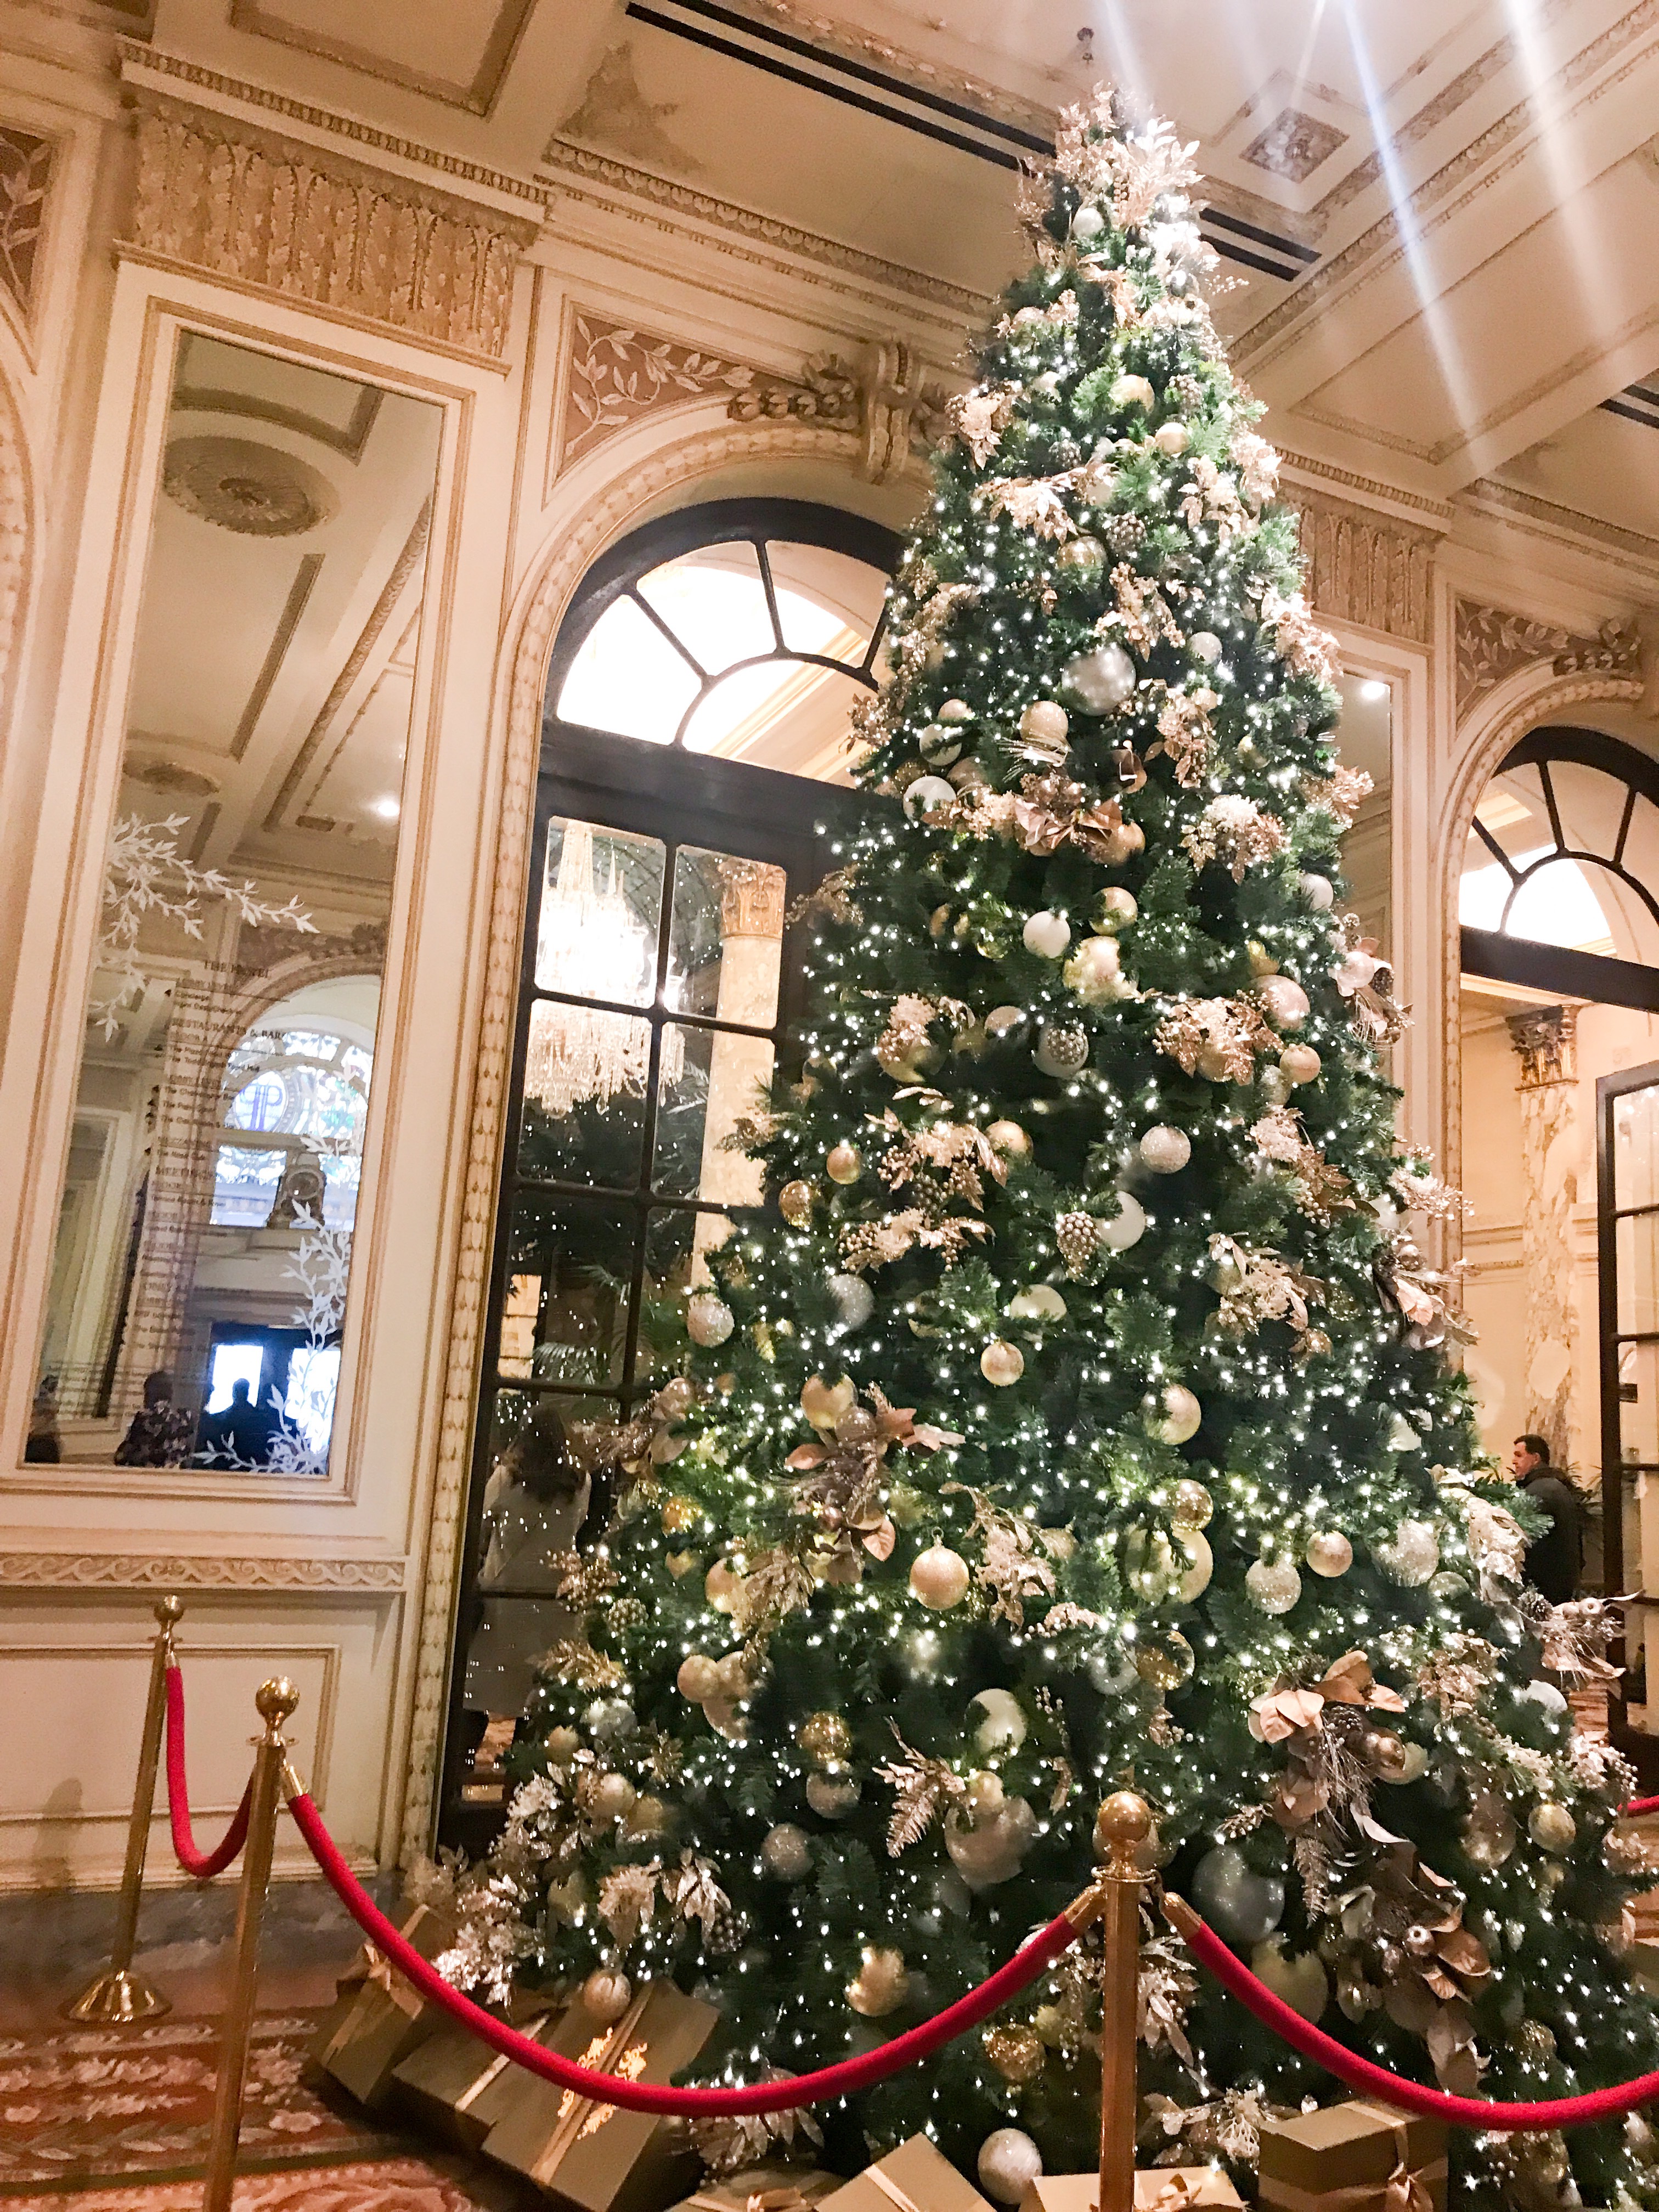 The Plaza hotel Christmas tree